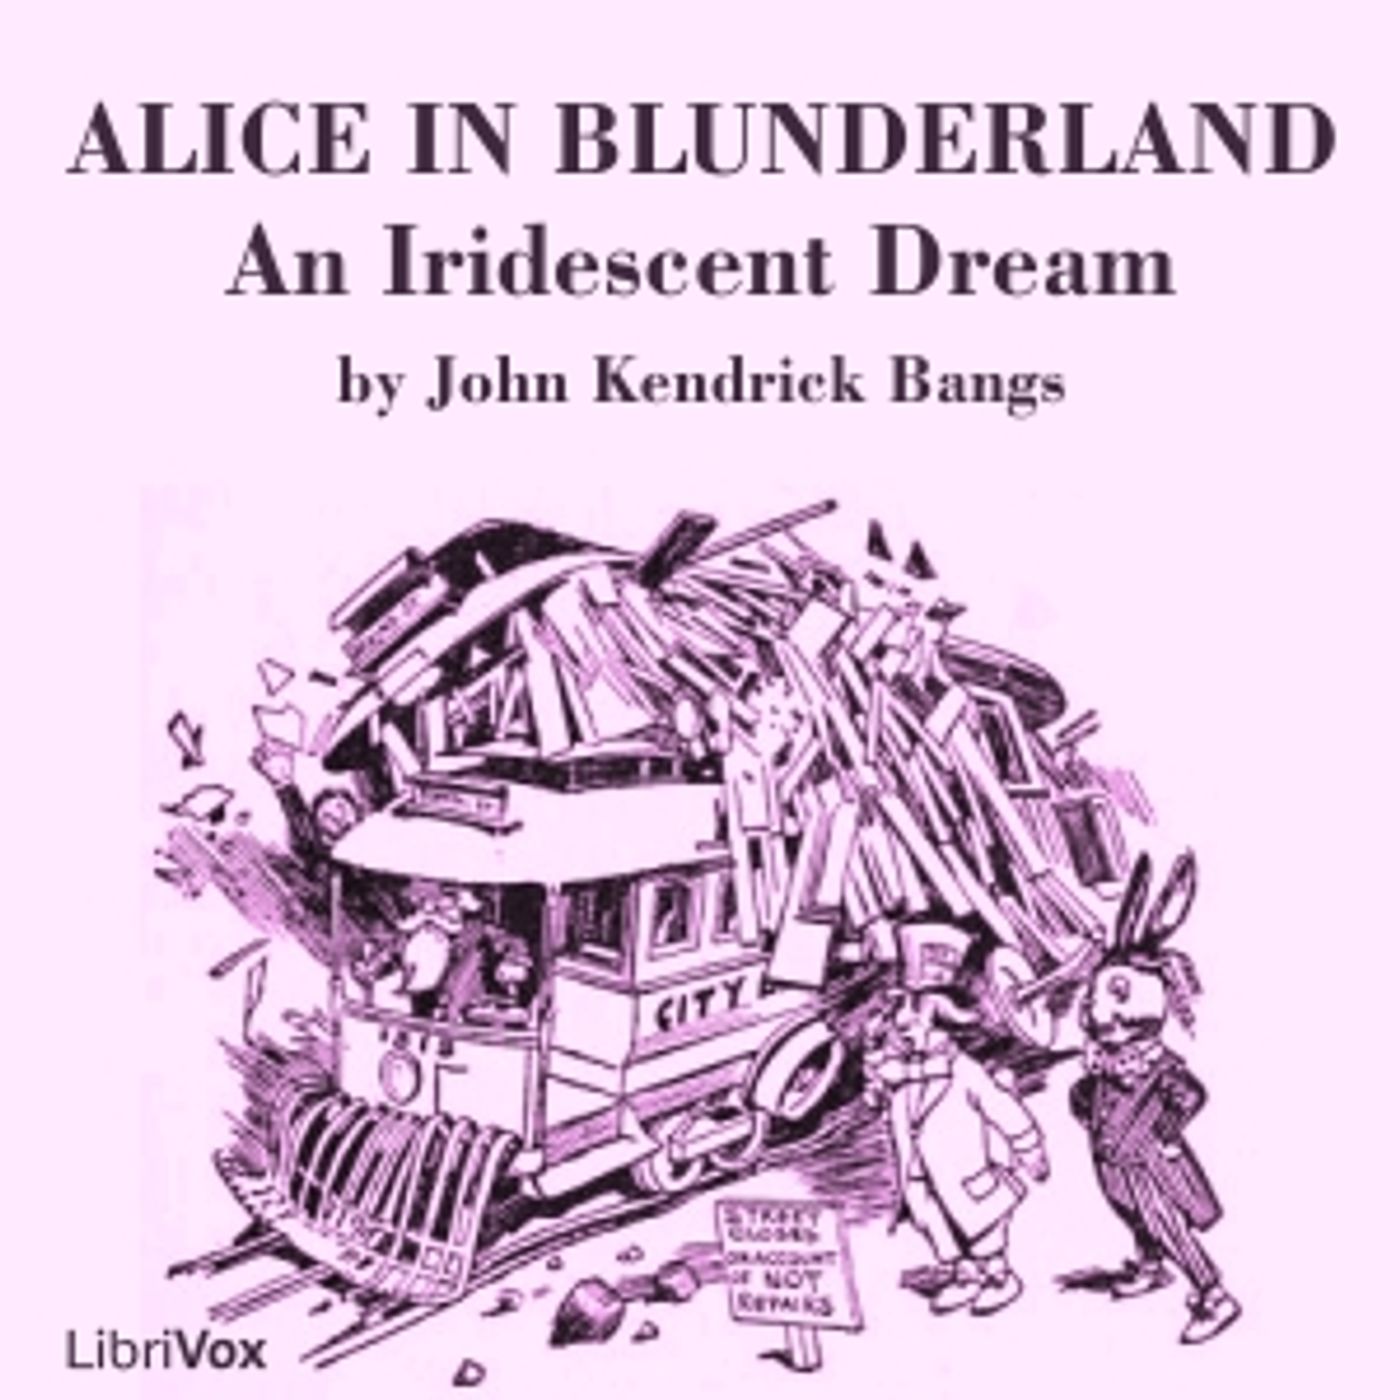 Alice in Blunderland: an Iridescent Dream (version 2) by John Kendrick Bangs (1862 – 1922)